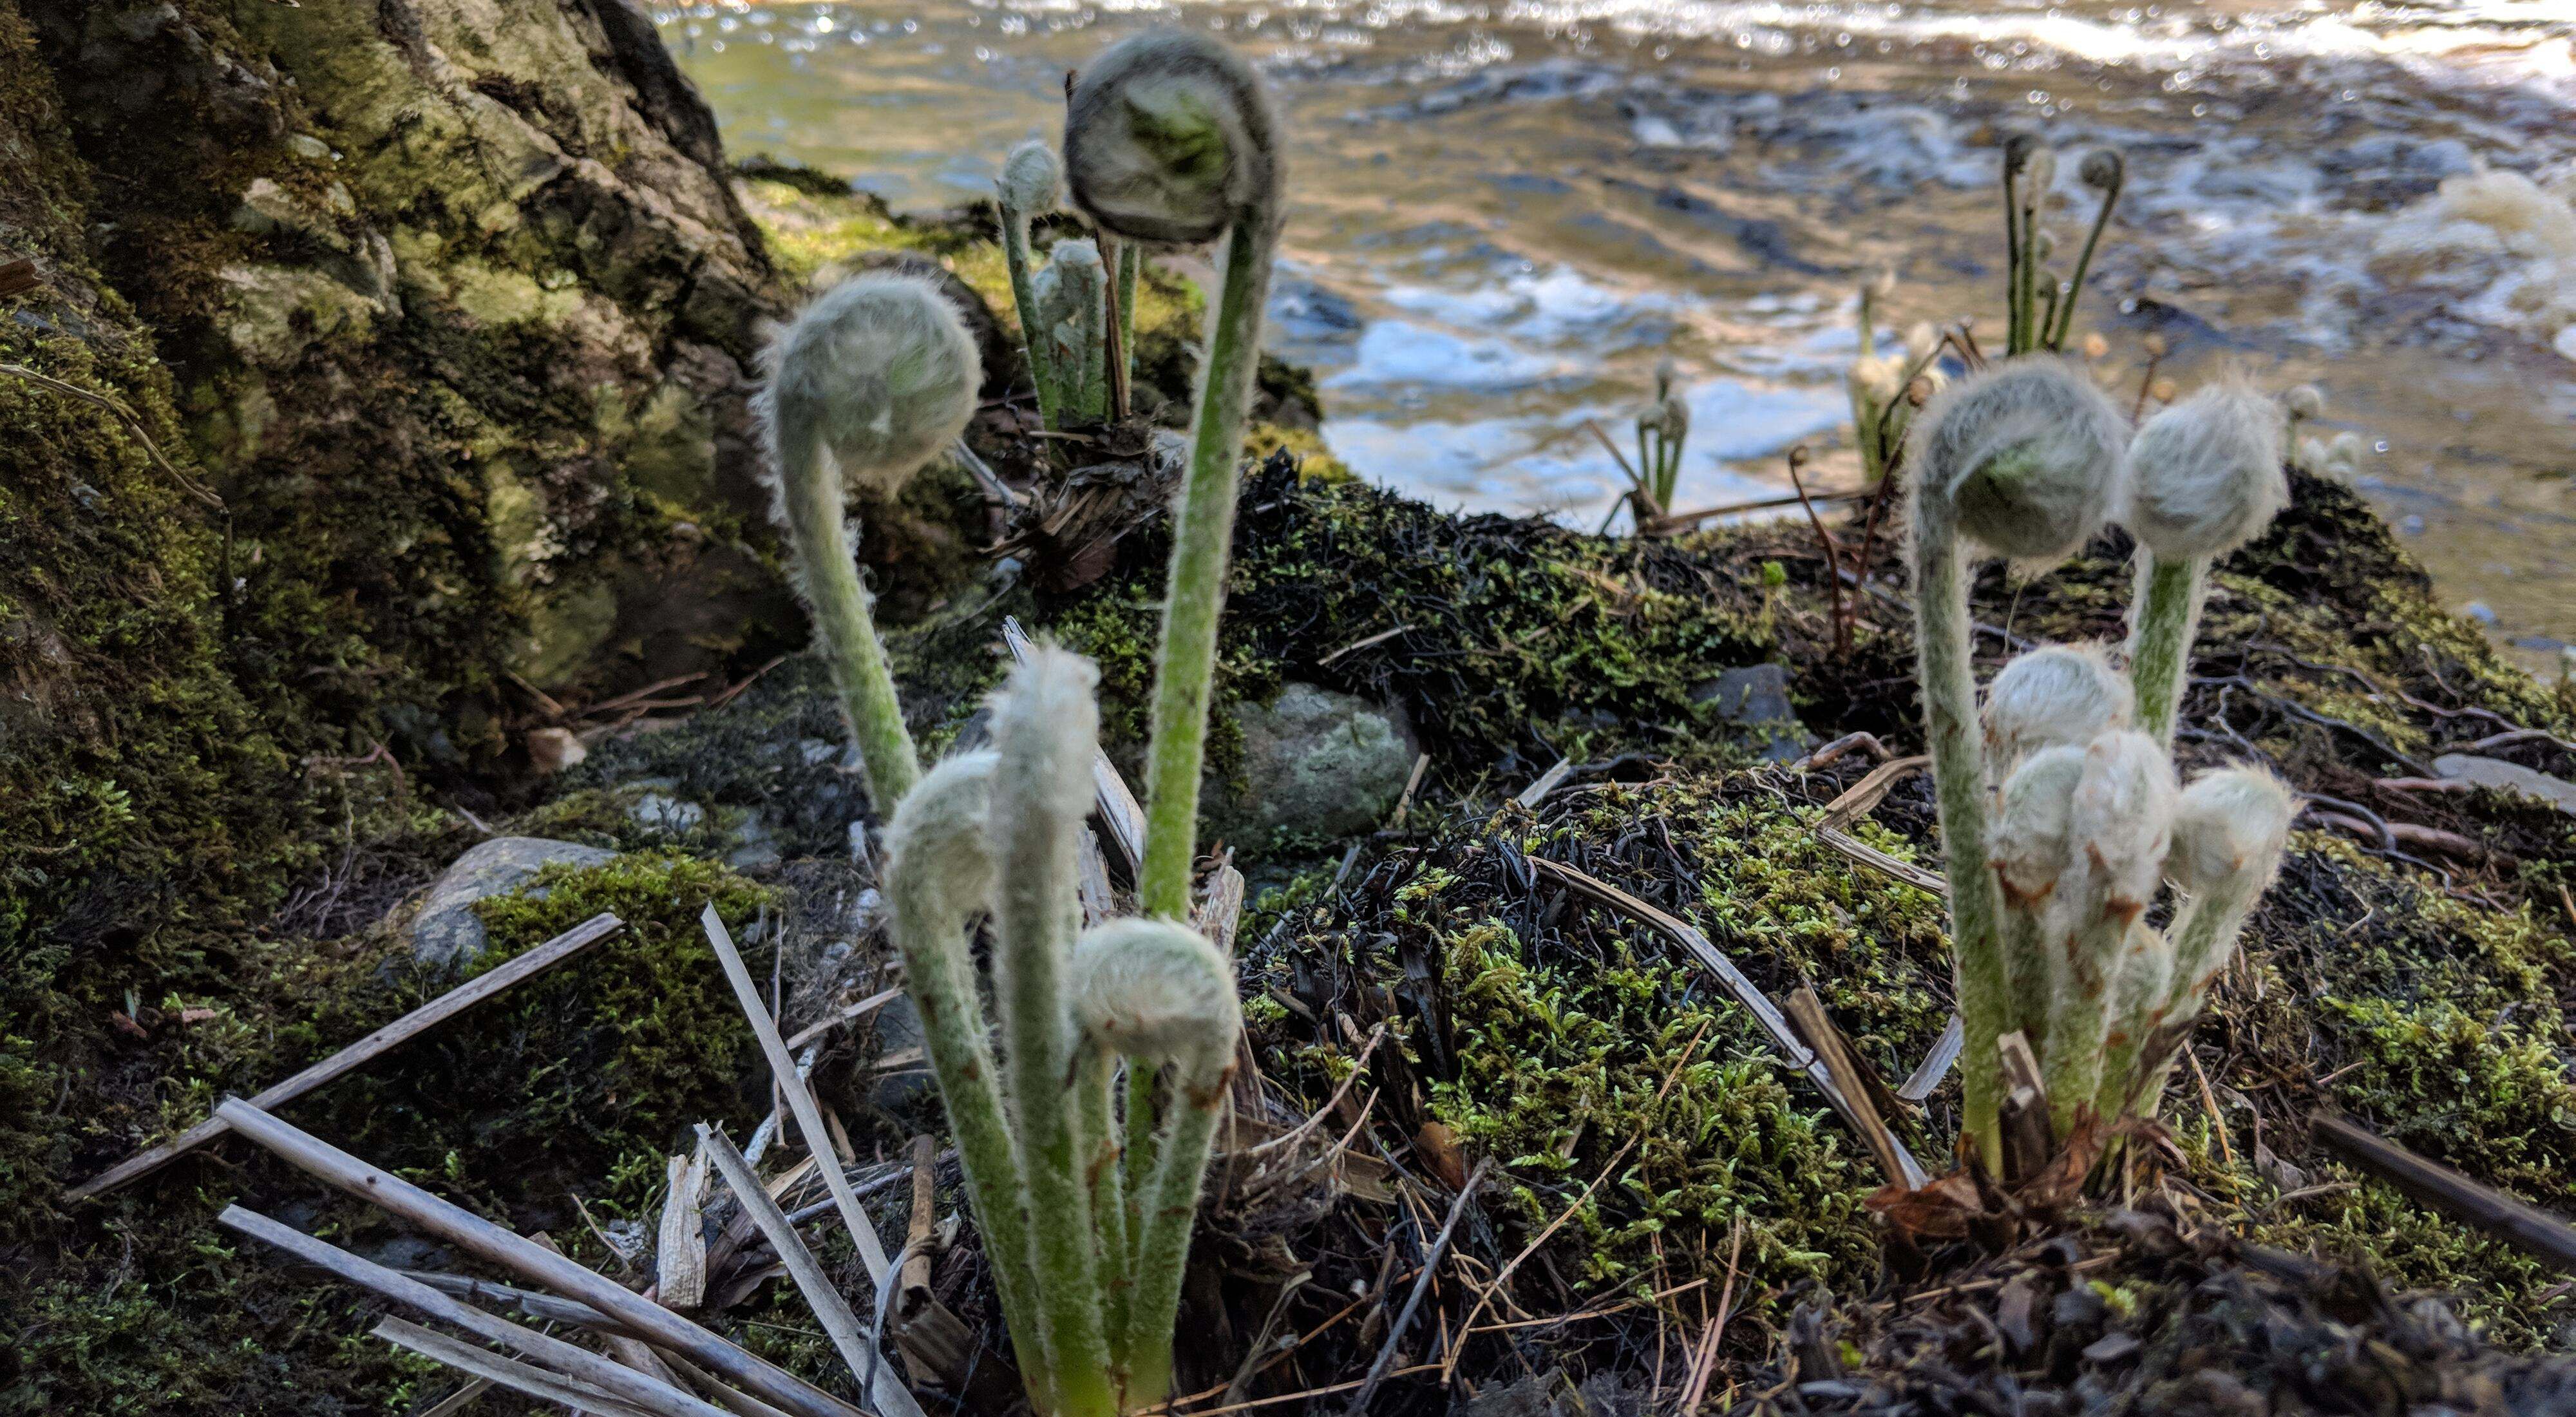 Closeup of budding ferns along the shore of a stream.